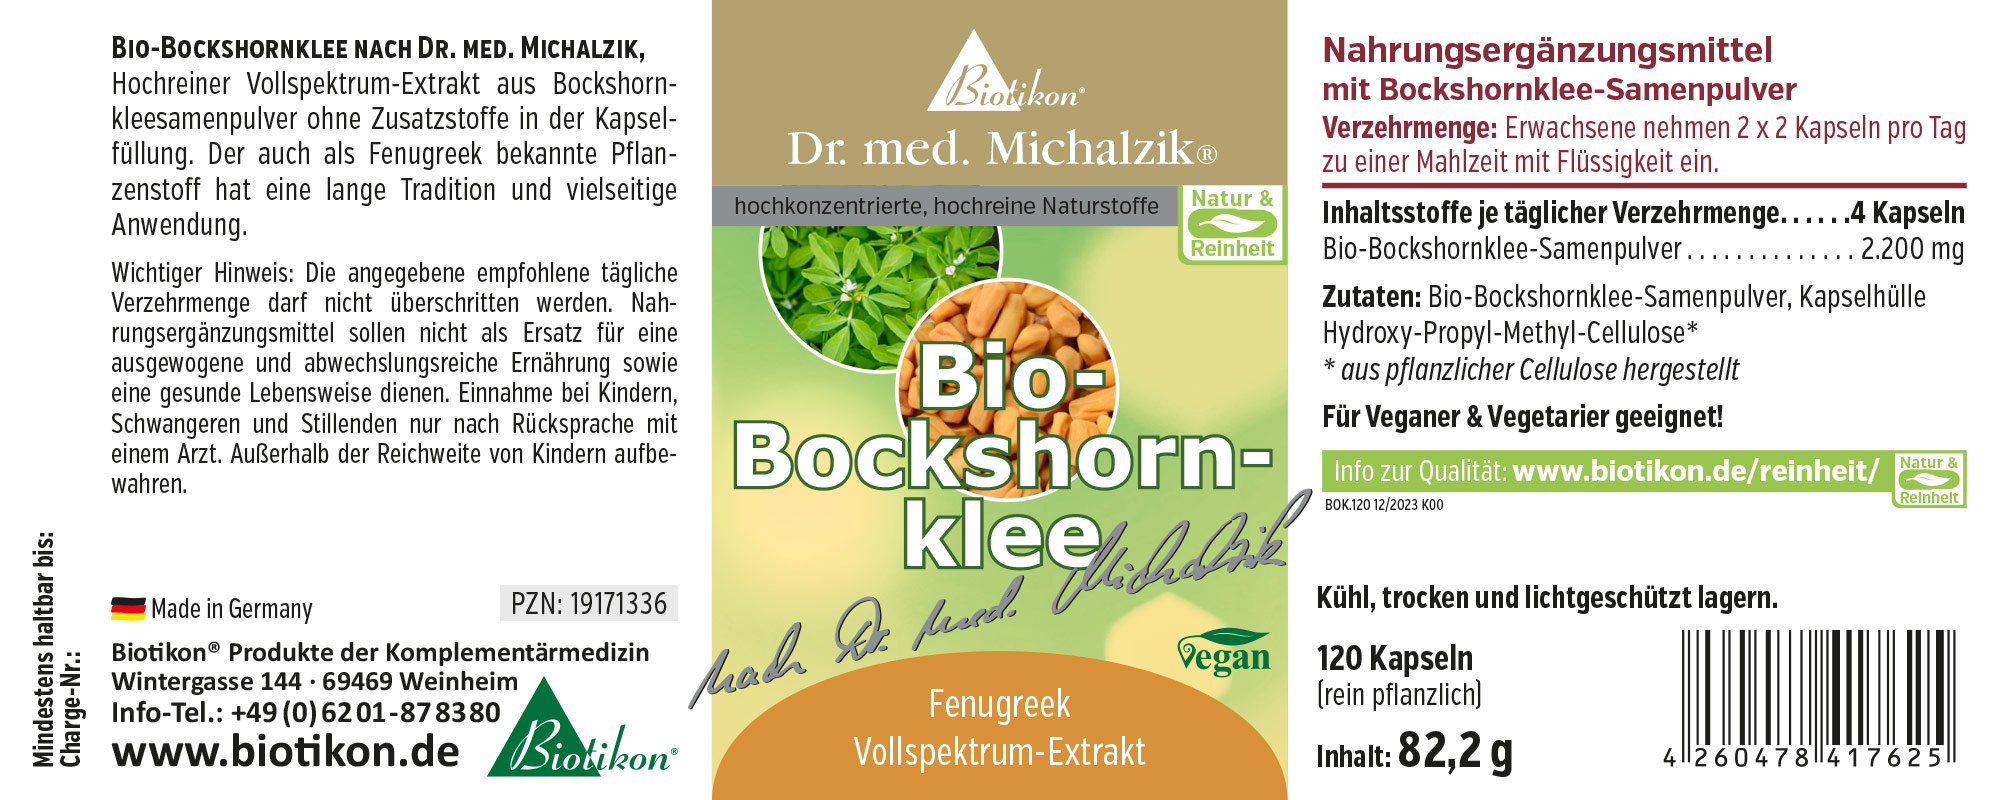 Bio-Bockshornklee nach Dr. med. Michalzik